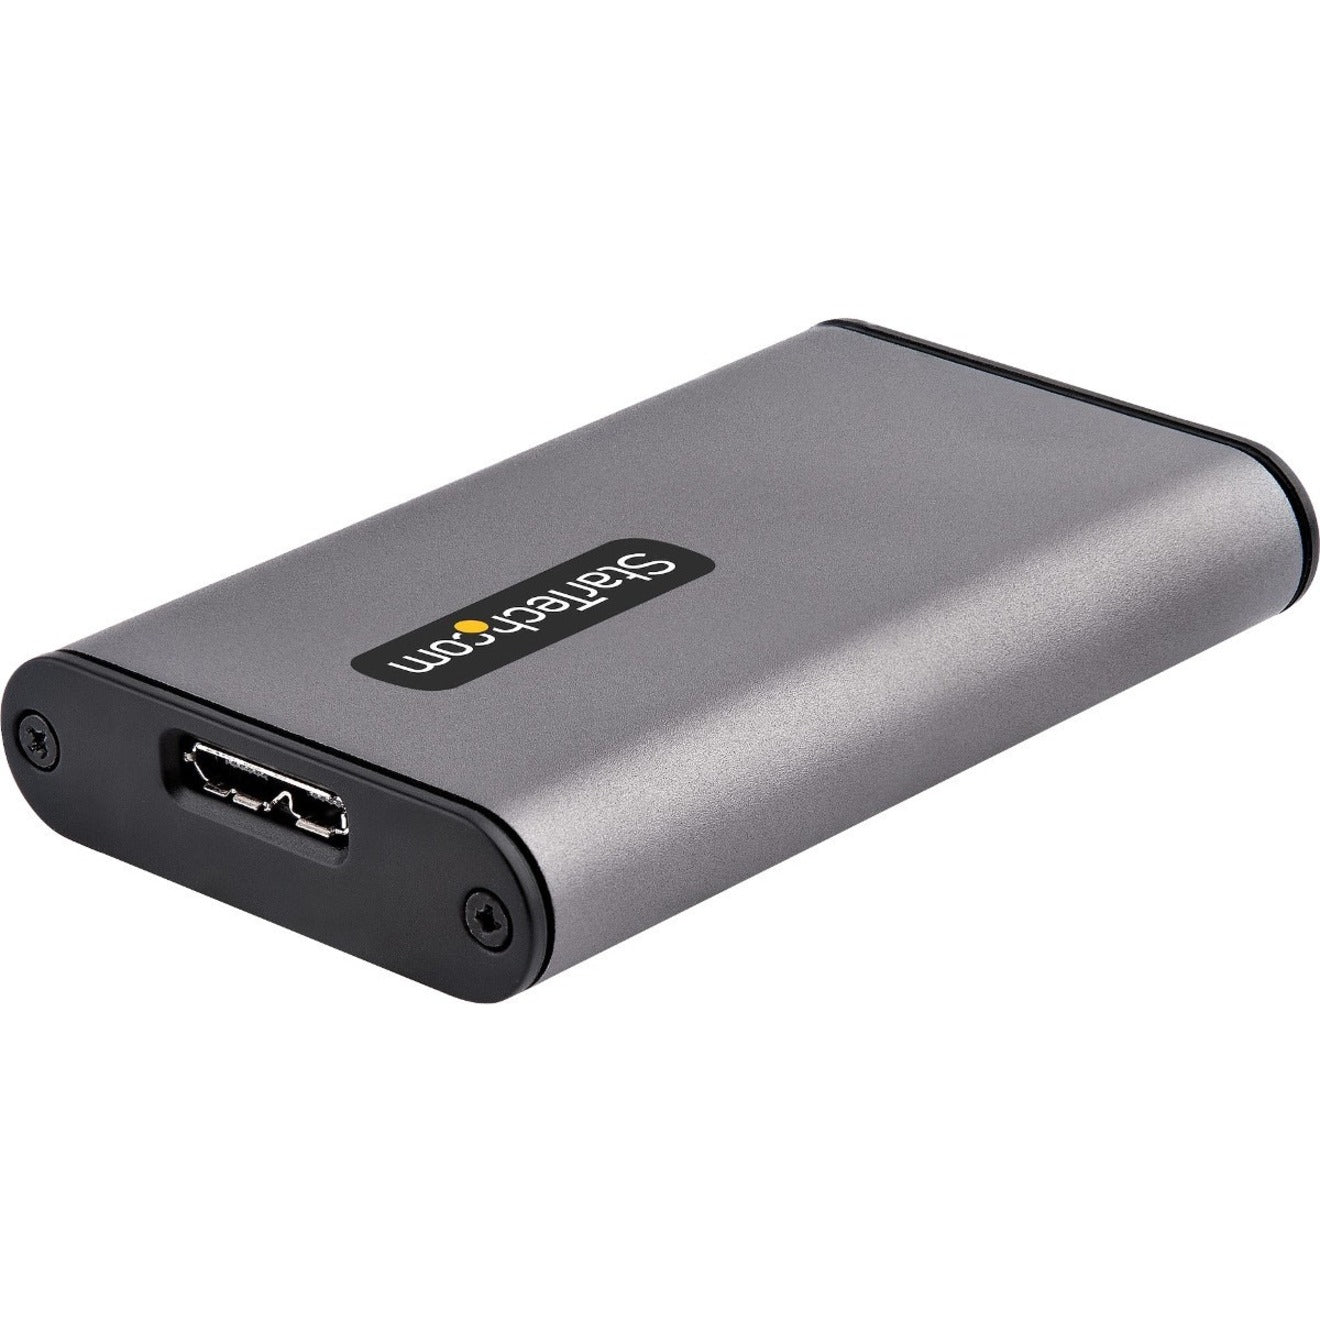 StarTech.com 4K30-HDMI-CAPTURE USB 3.0 HDMI Video Capture Device, Record and Stream 4K Video